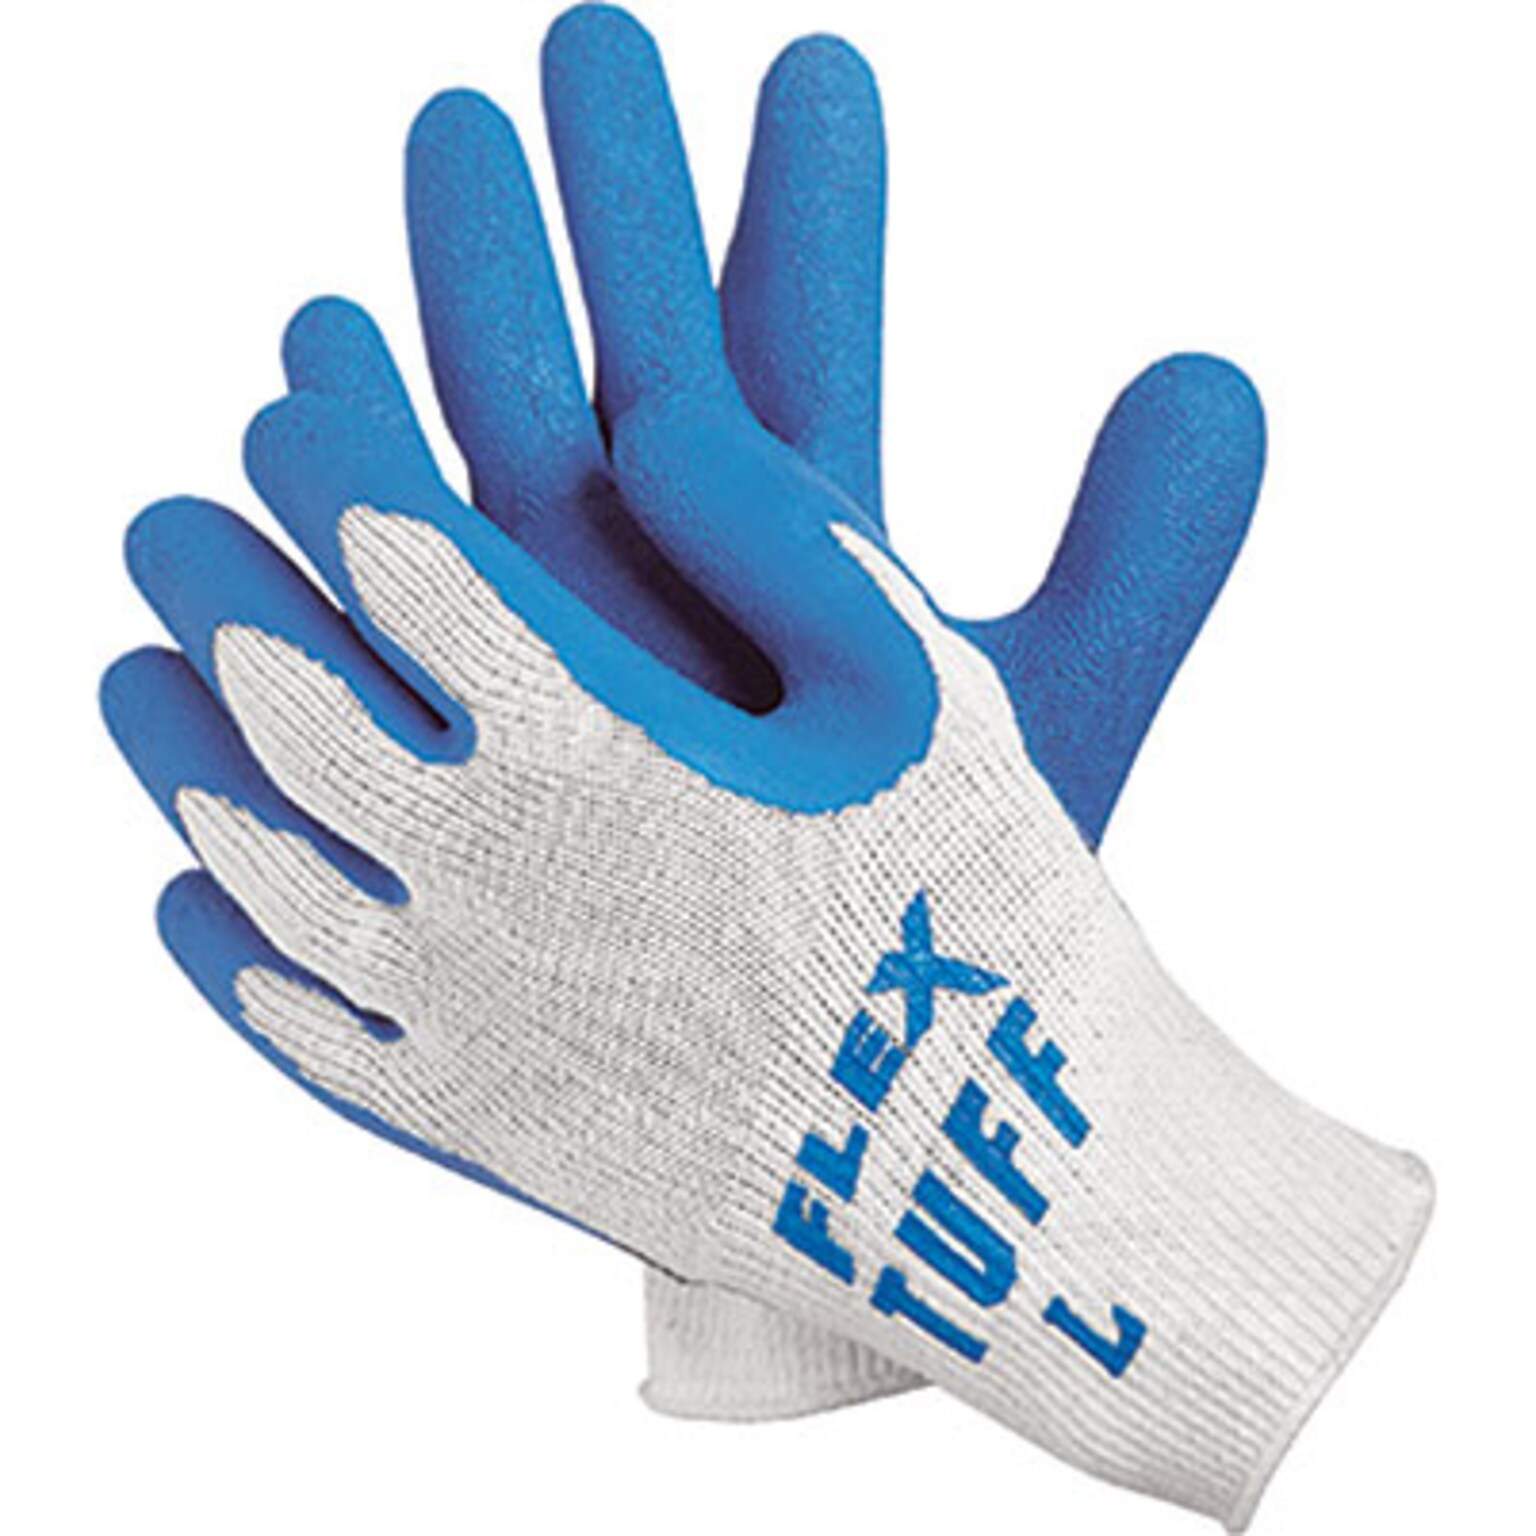 Memphis Gloves Flex-Tuff Coated Work Gloves, Cotton, Knit-Wrist Cuff, White/Blue,  X-Large, 12 Pairs (9680M)